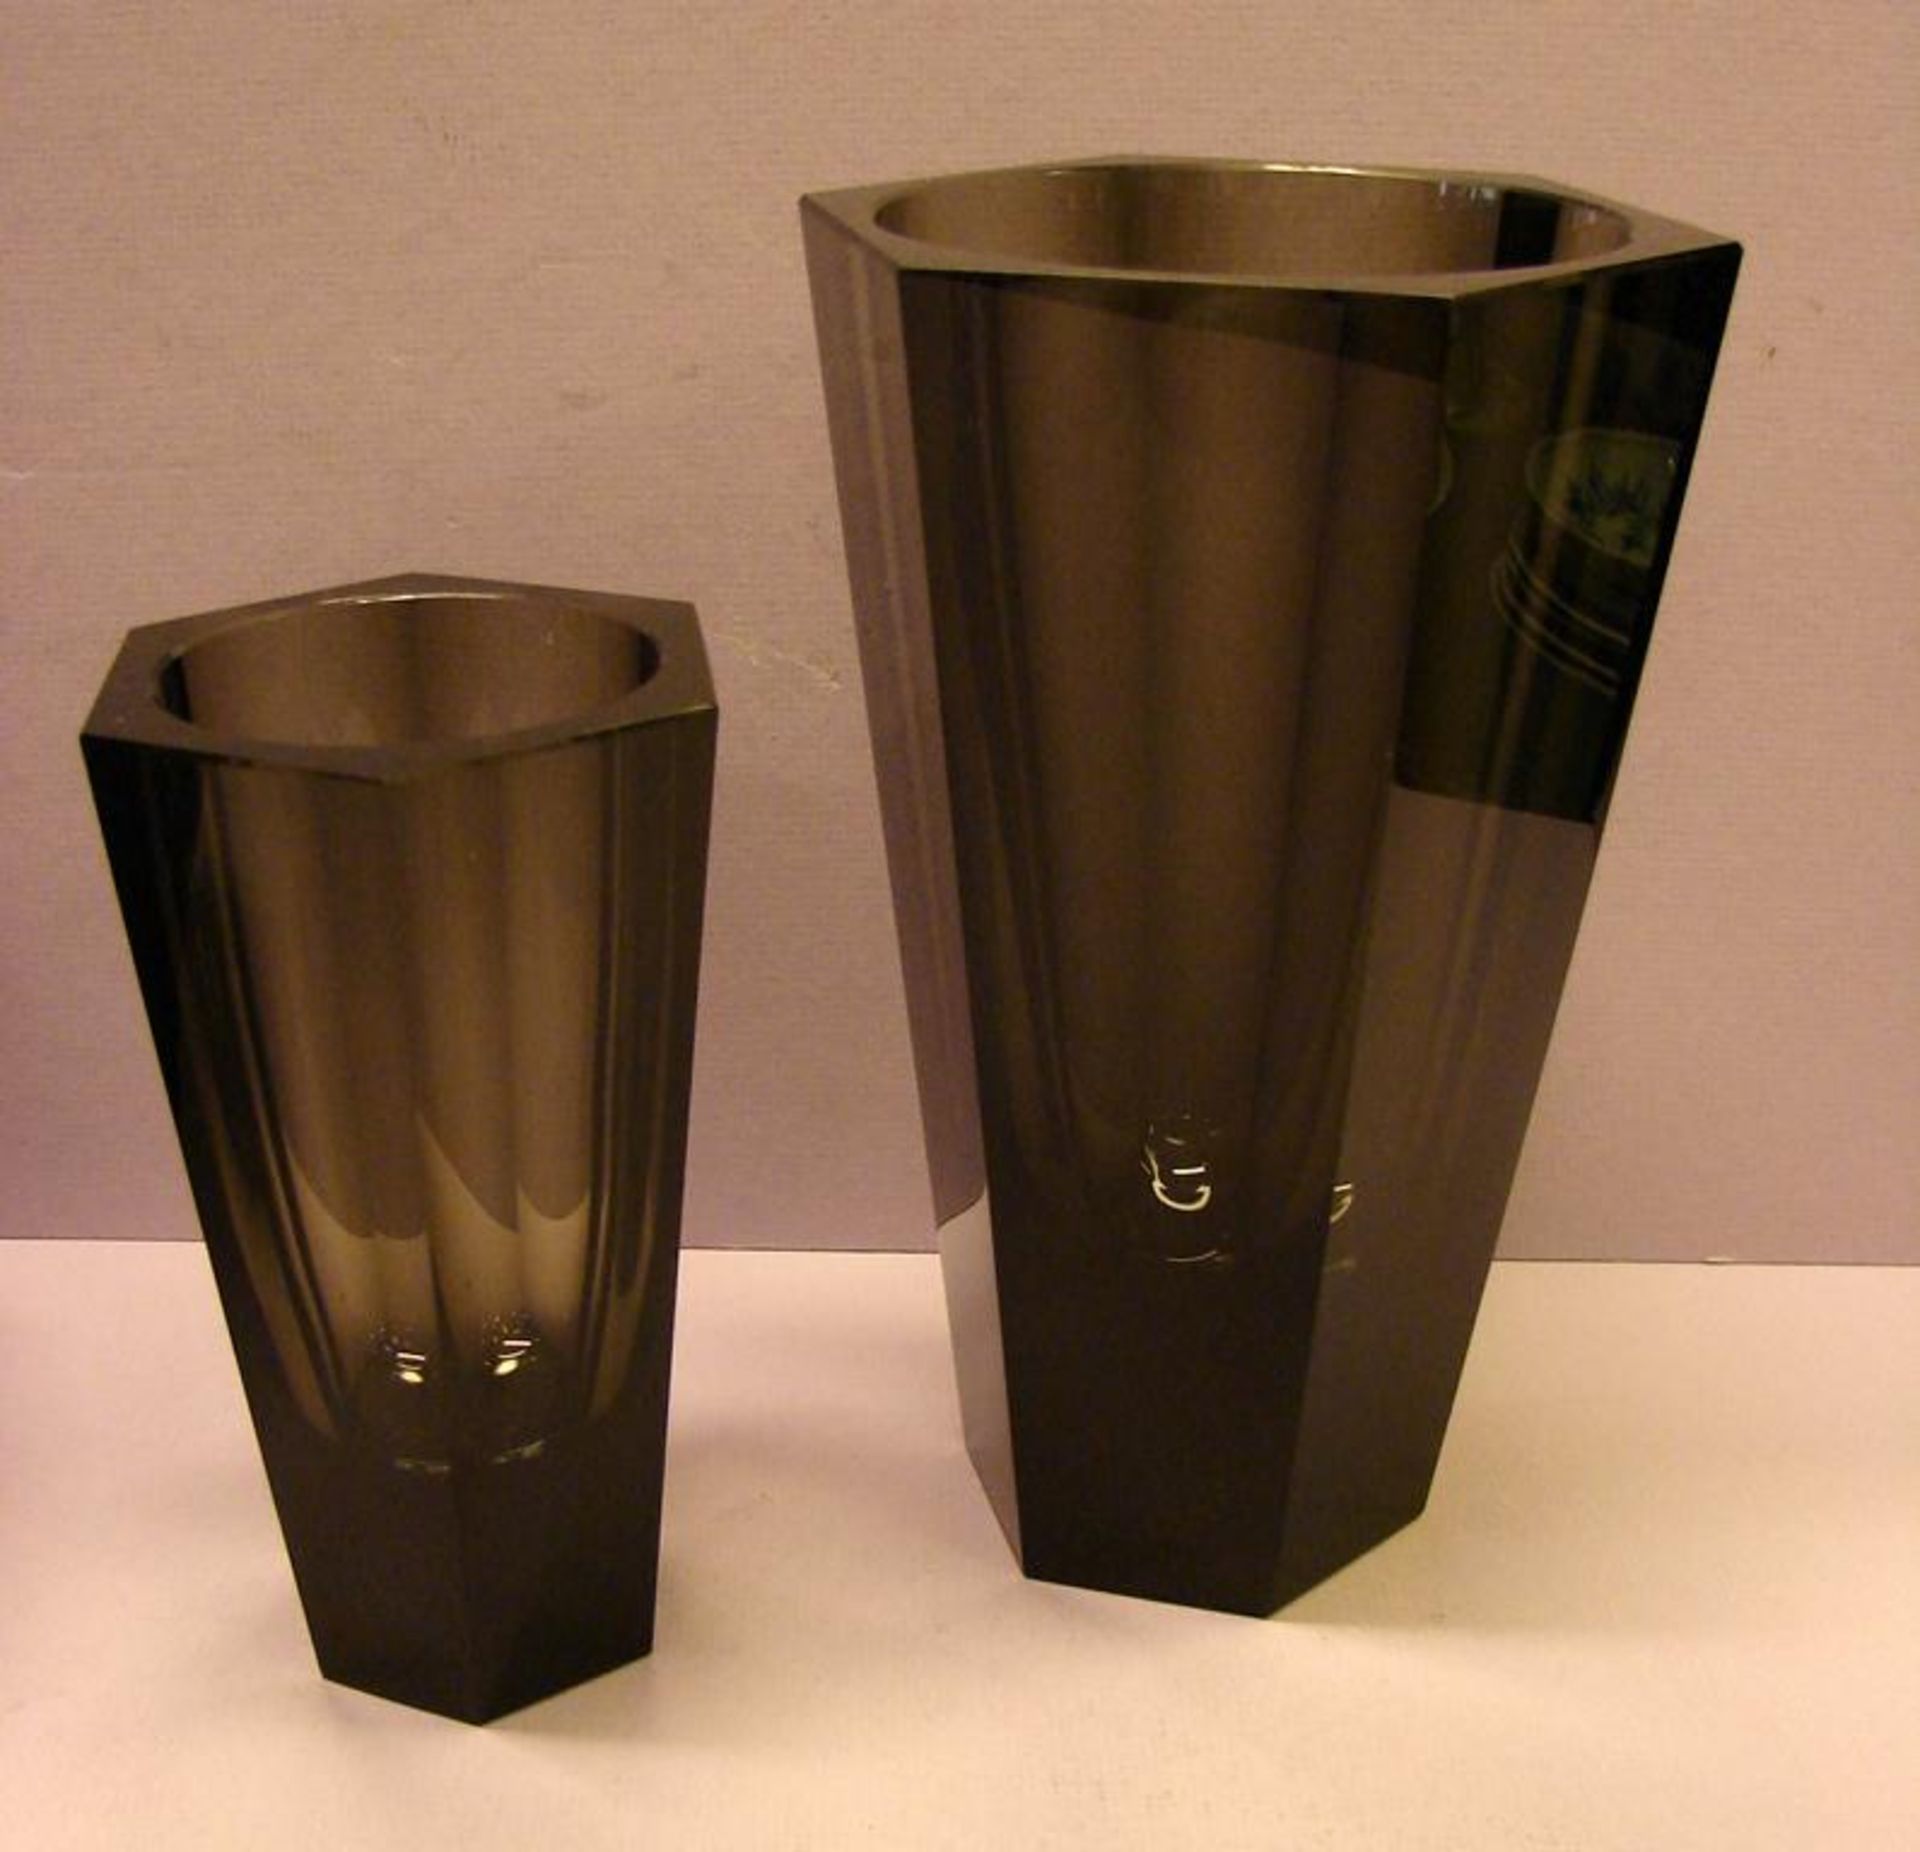 Paar Vasen, Modell Purity, Smoke, Moser, H.ca. 16, 23 cm- - -22.00 % buyer's premium on the hammer